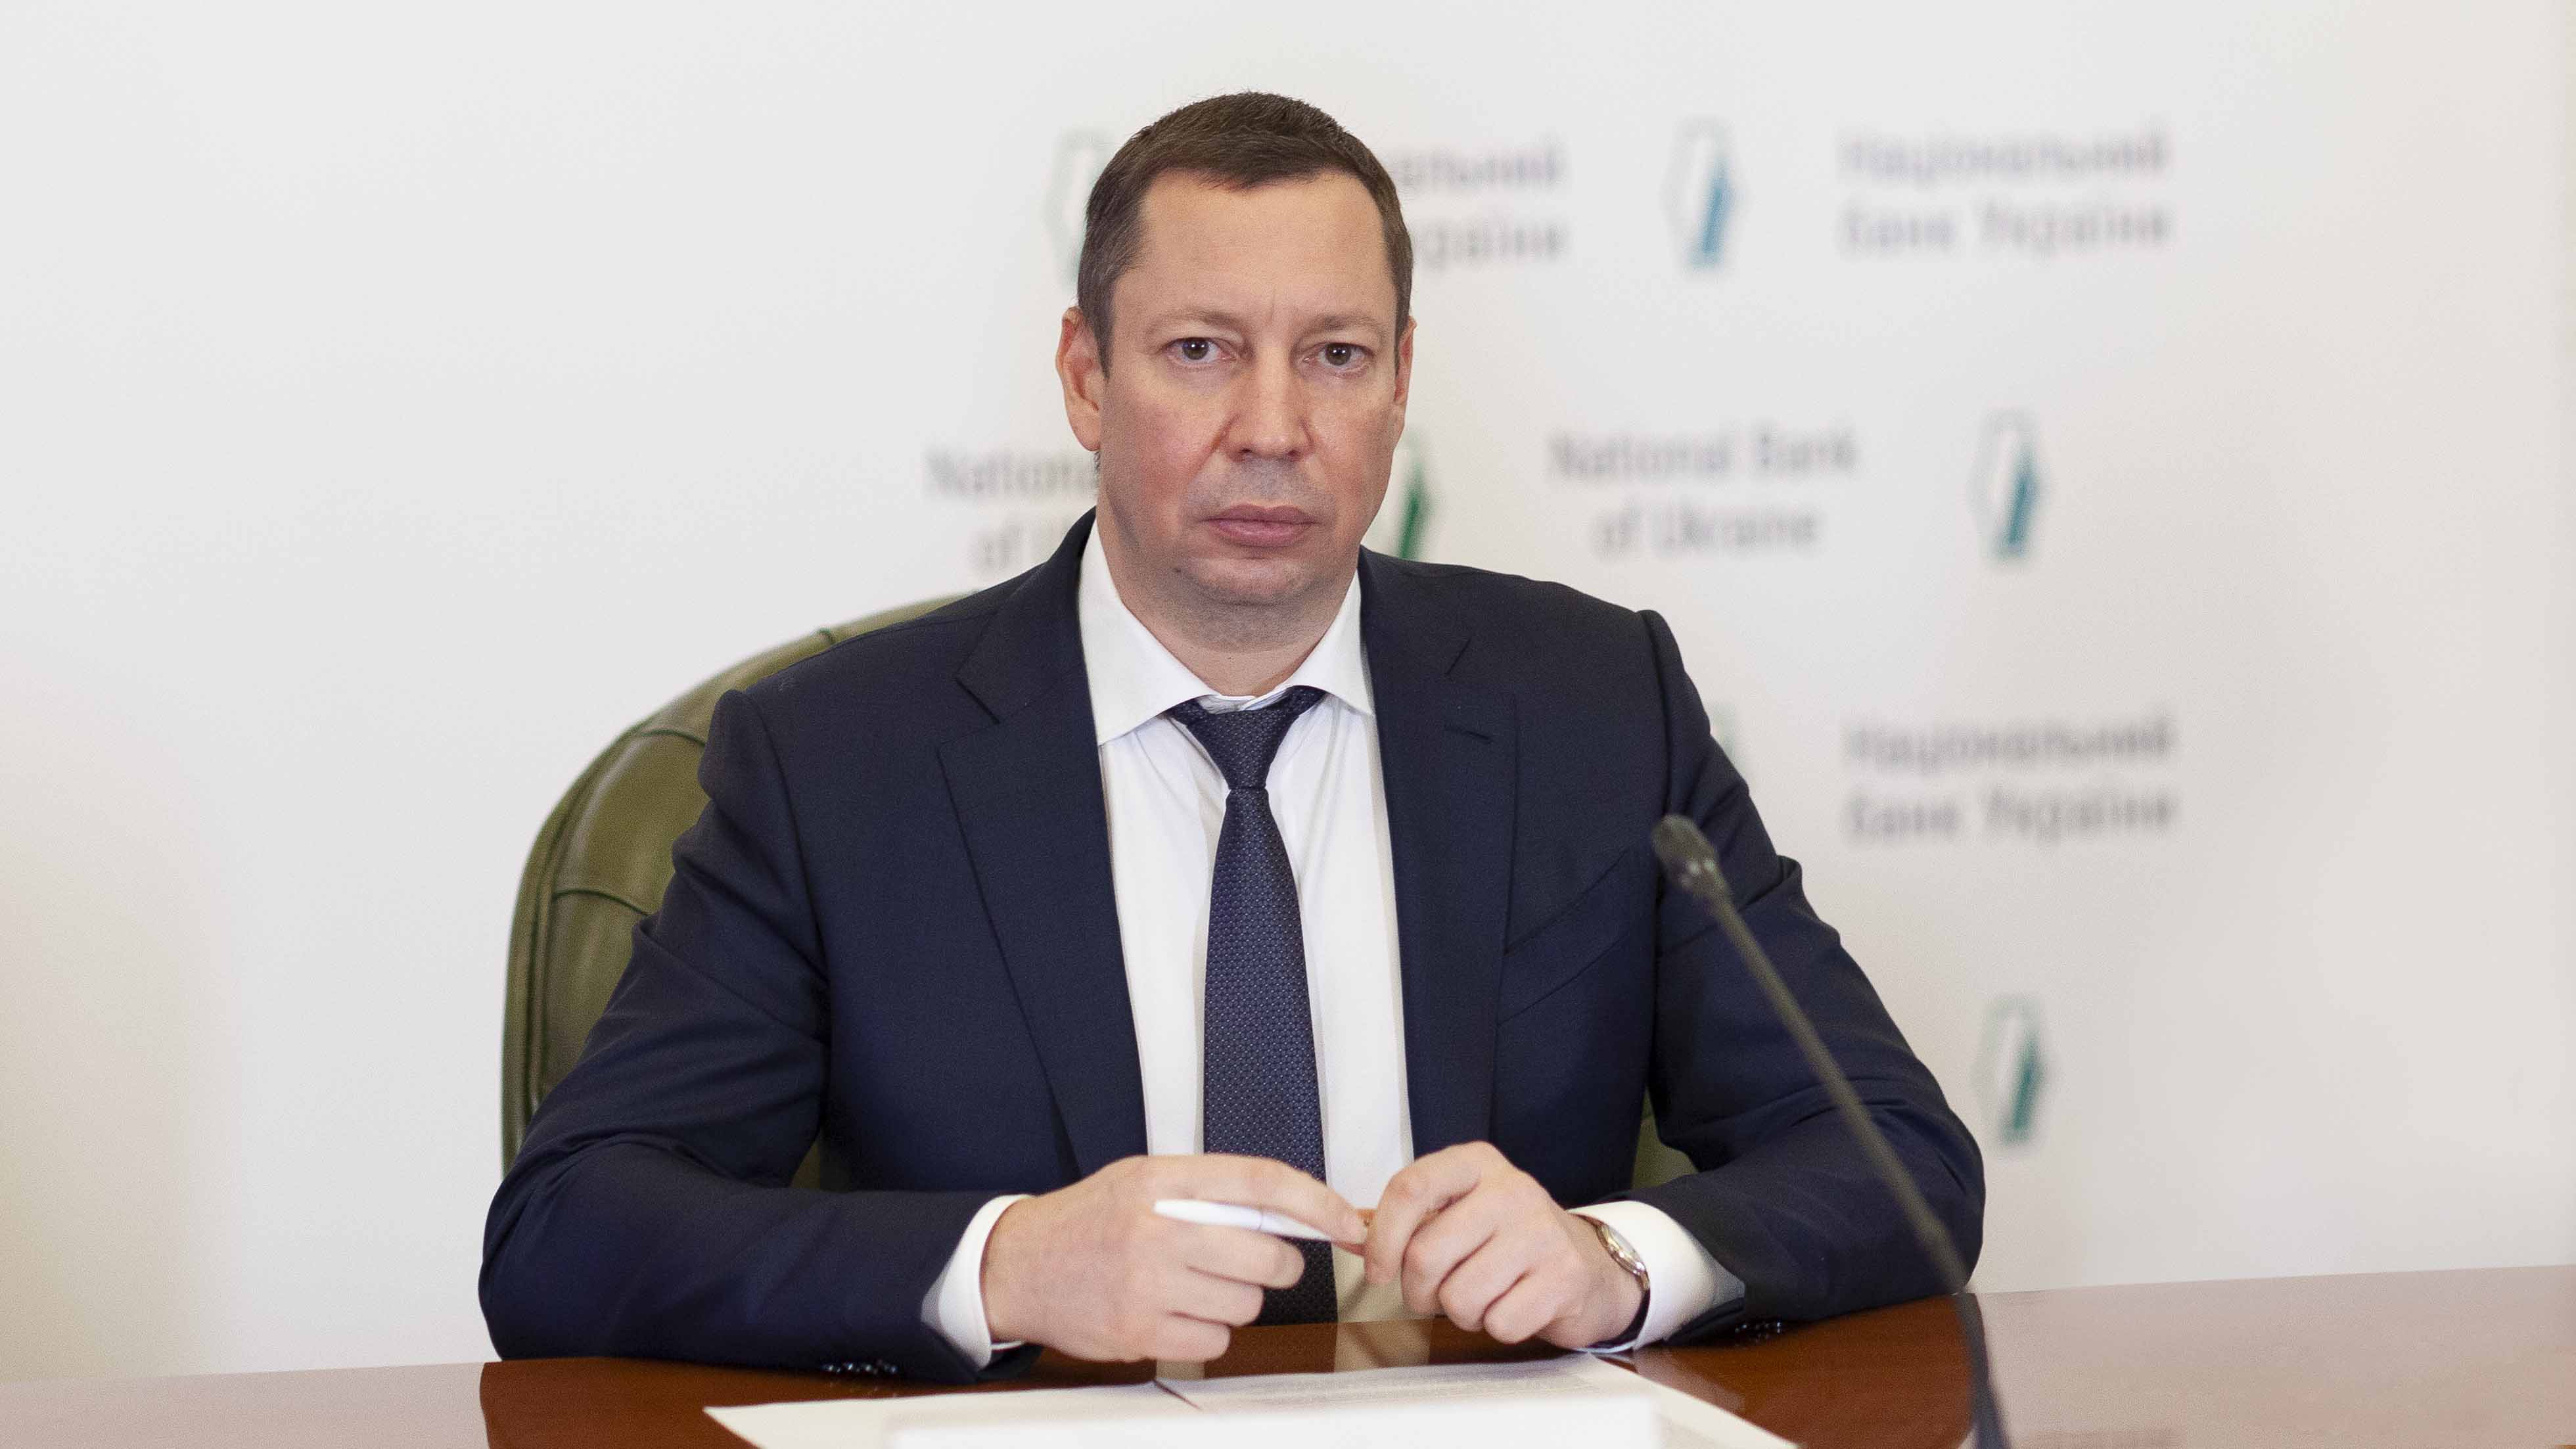 NBU Governor Kyrylo Shevchenko’s interview with BBC